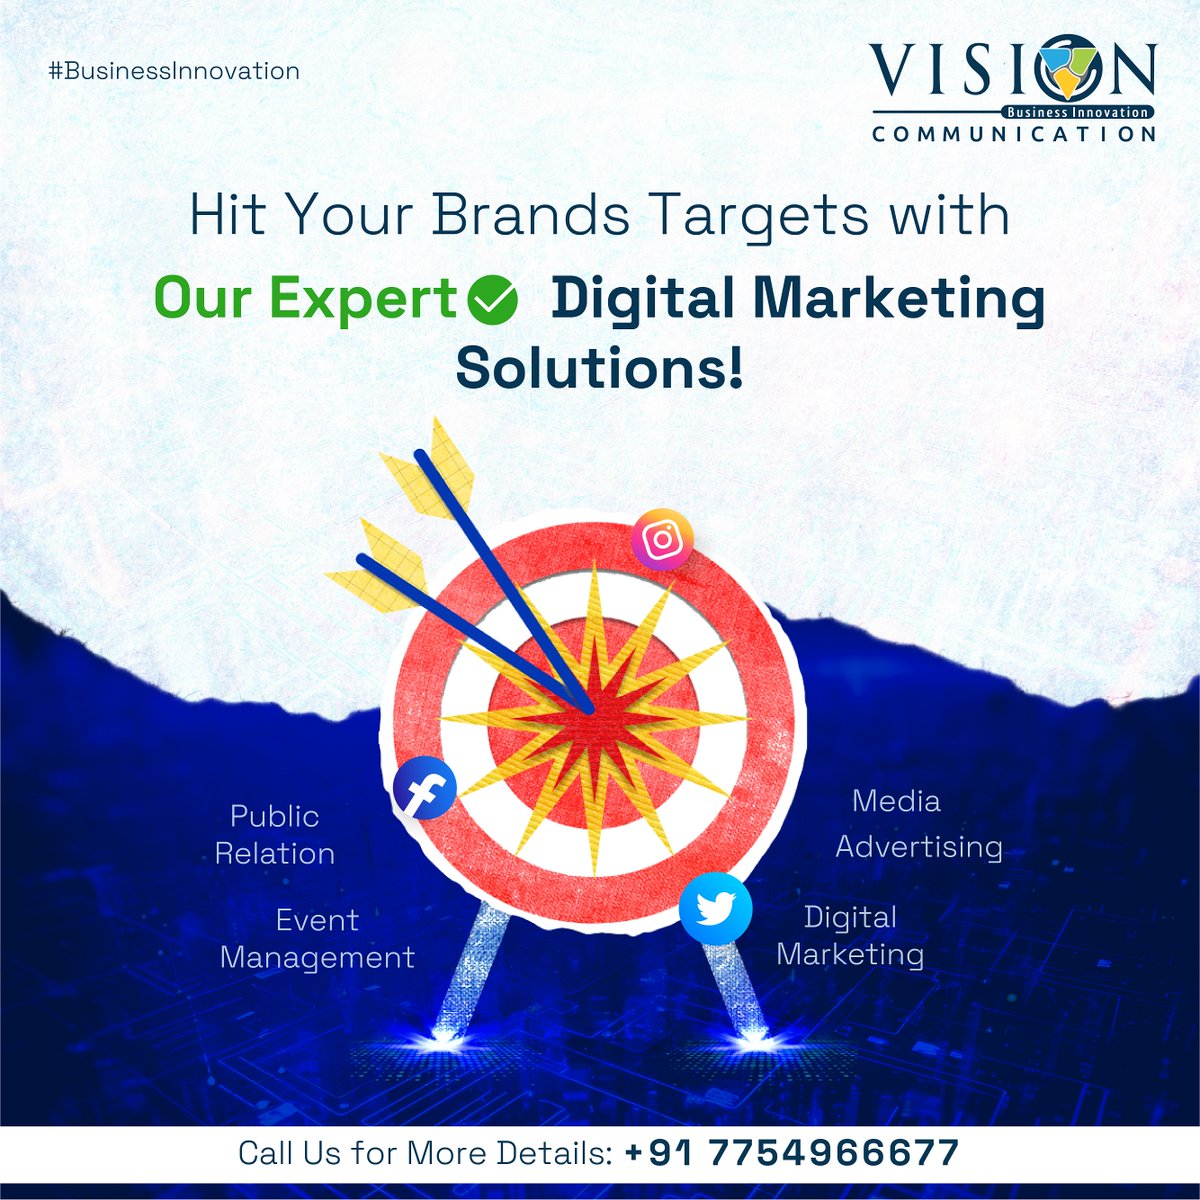 Hit your Brands Targets with Our Expert Digital Marketing Solutions.
#Advertising #socialmediamarketing #Media #Lucknow #webdesign #graphicdesign #DigitalMarketing #seo #WebPromotion #GomtiNagar #marketingstrategy

#VisionCommunication #VisionCorp #BusinessInnovation